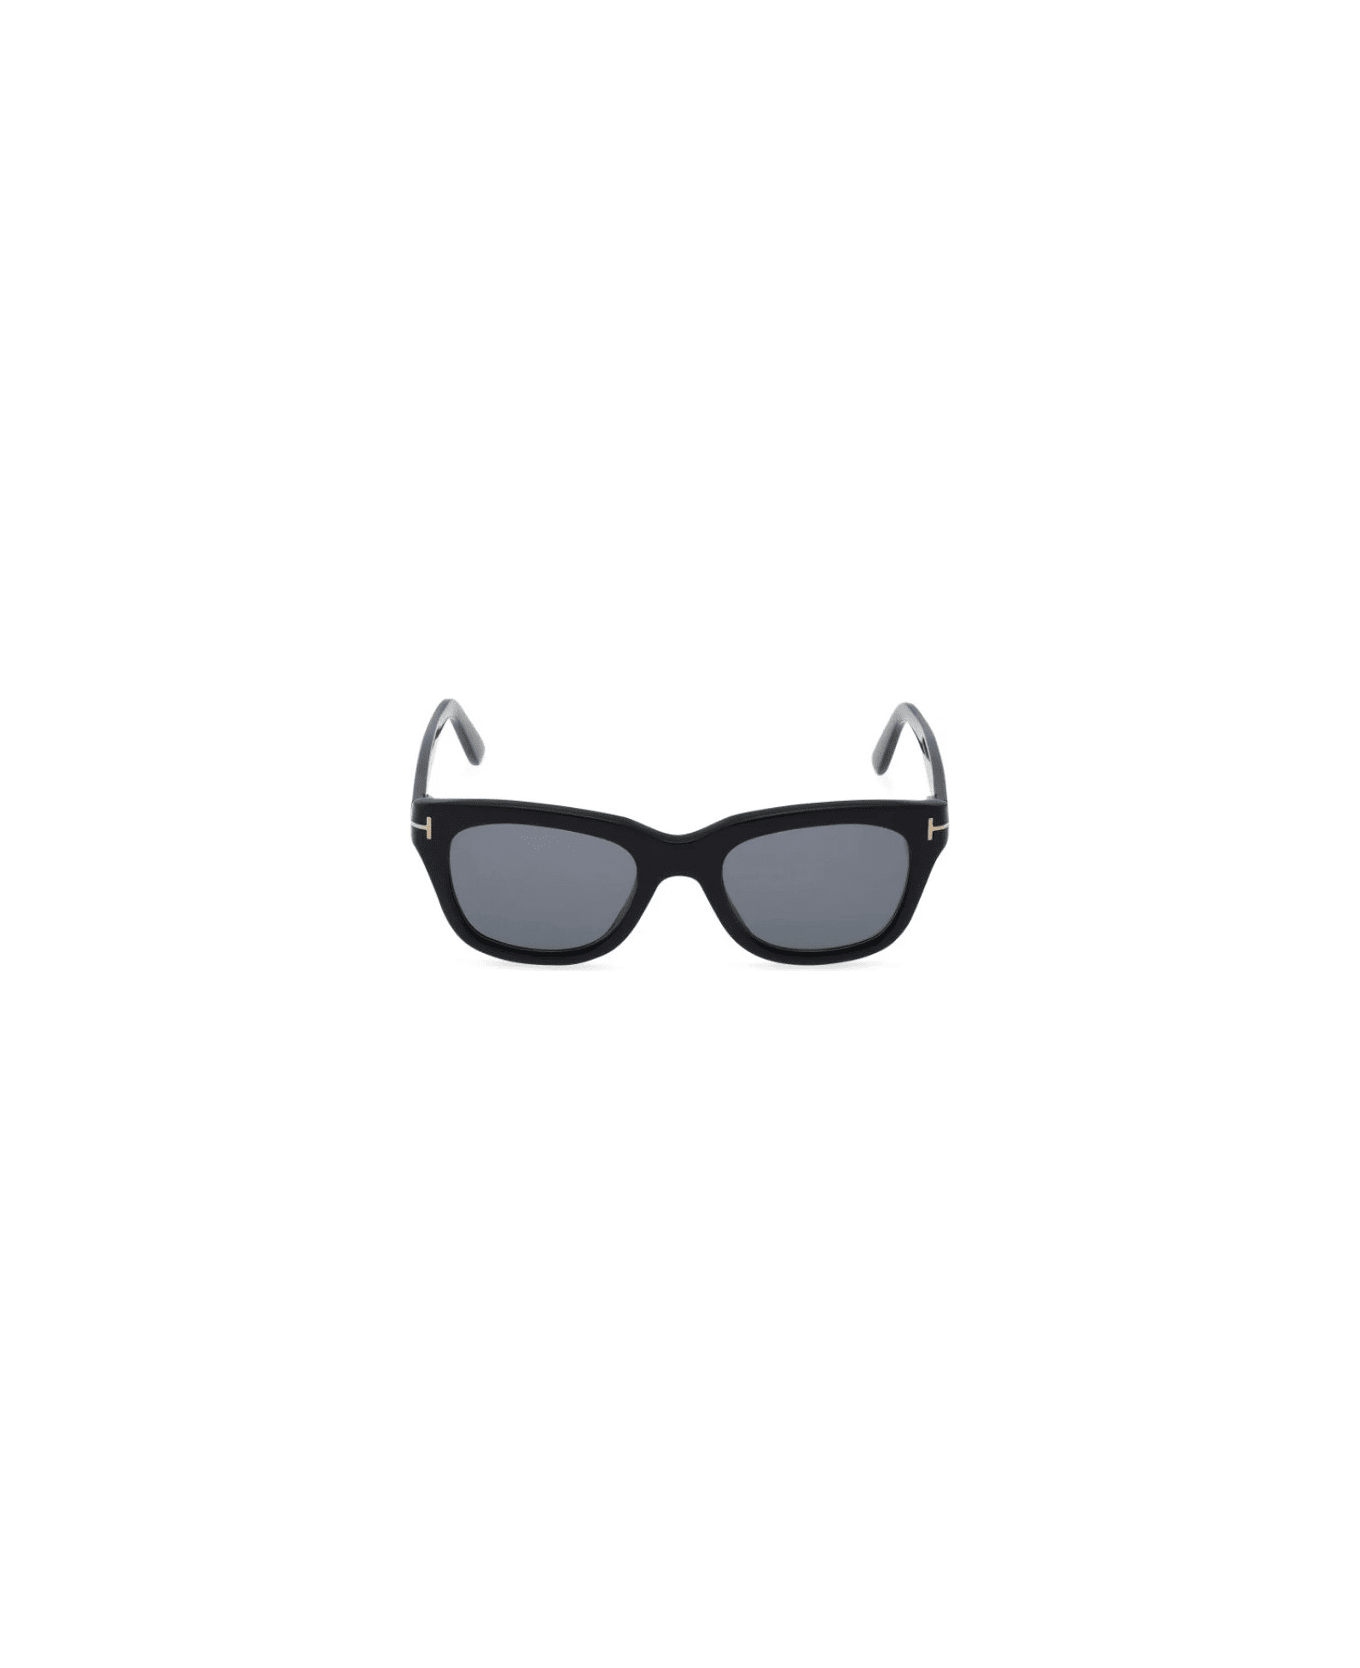 Tom Ford Eyewear FT0237 01D Sunglasses